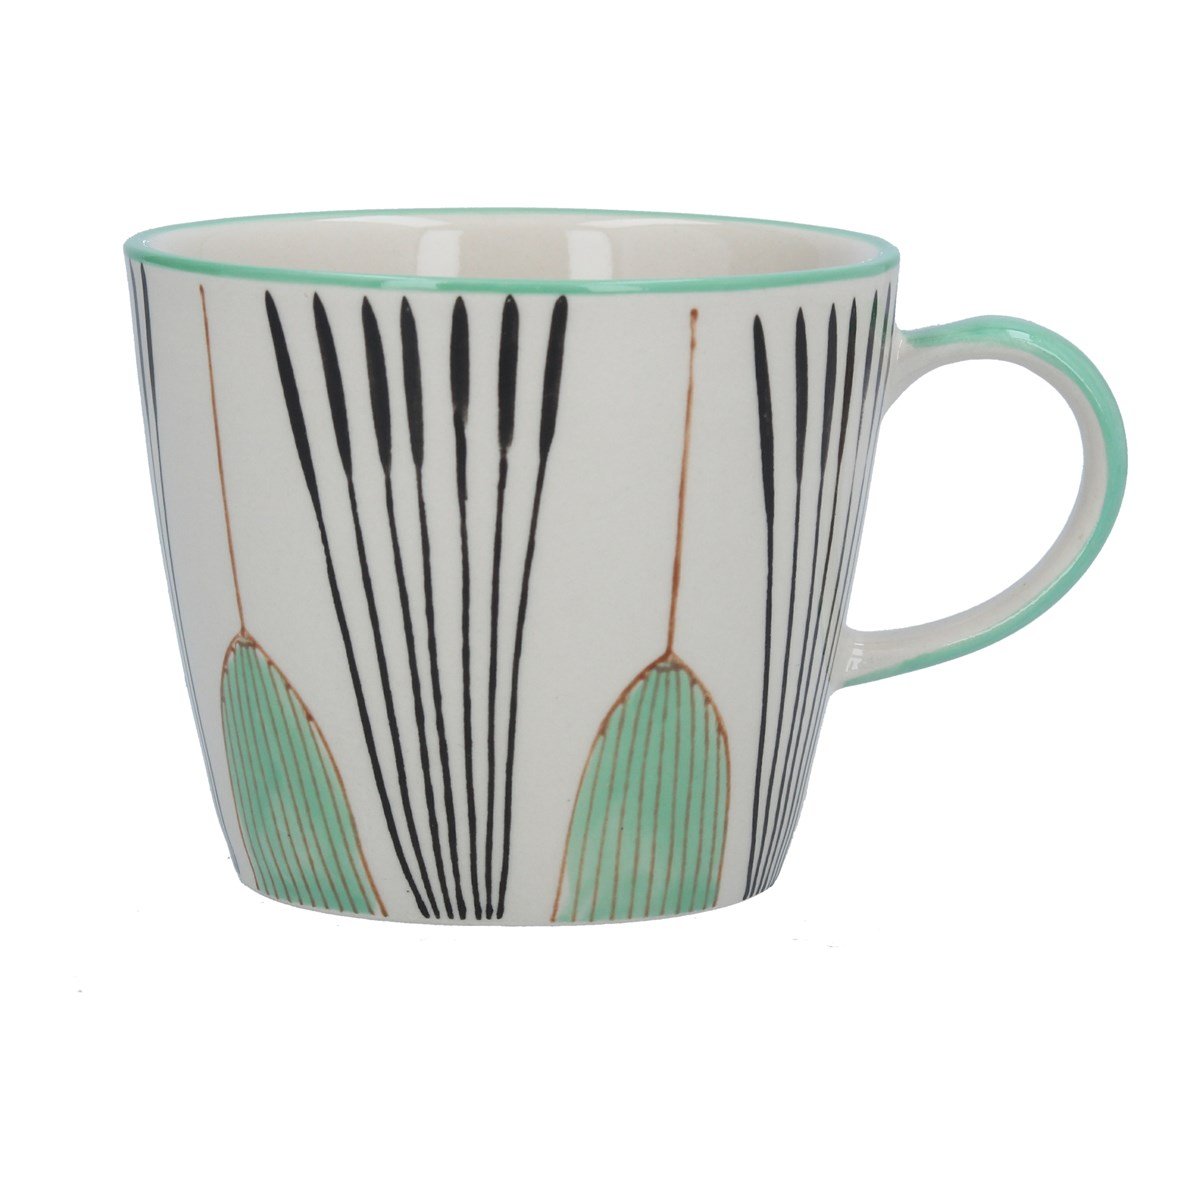 Designer Backpacks Gift Ideas - Tea Cups & Tulips